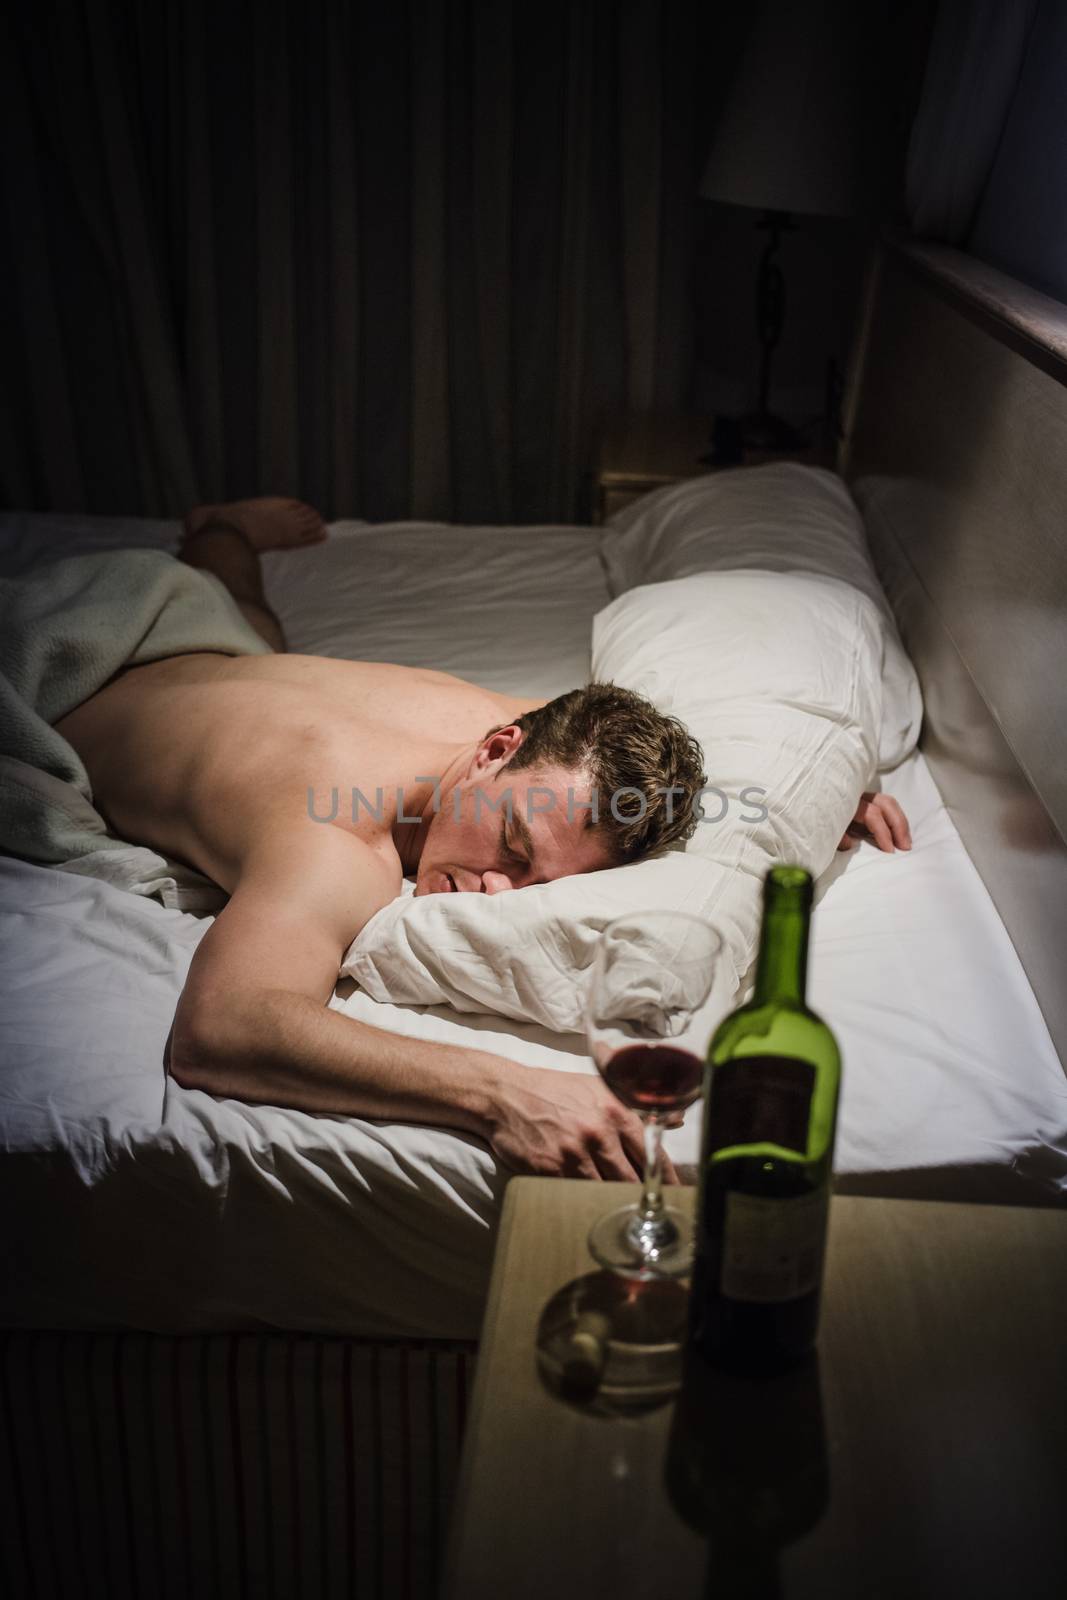 Lonely Drunk Man Sleeping by aetb